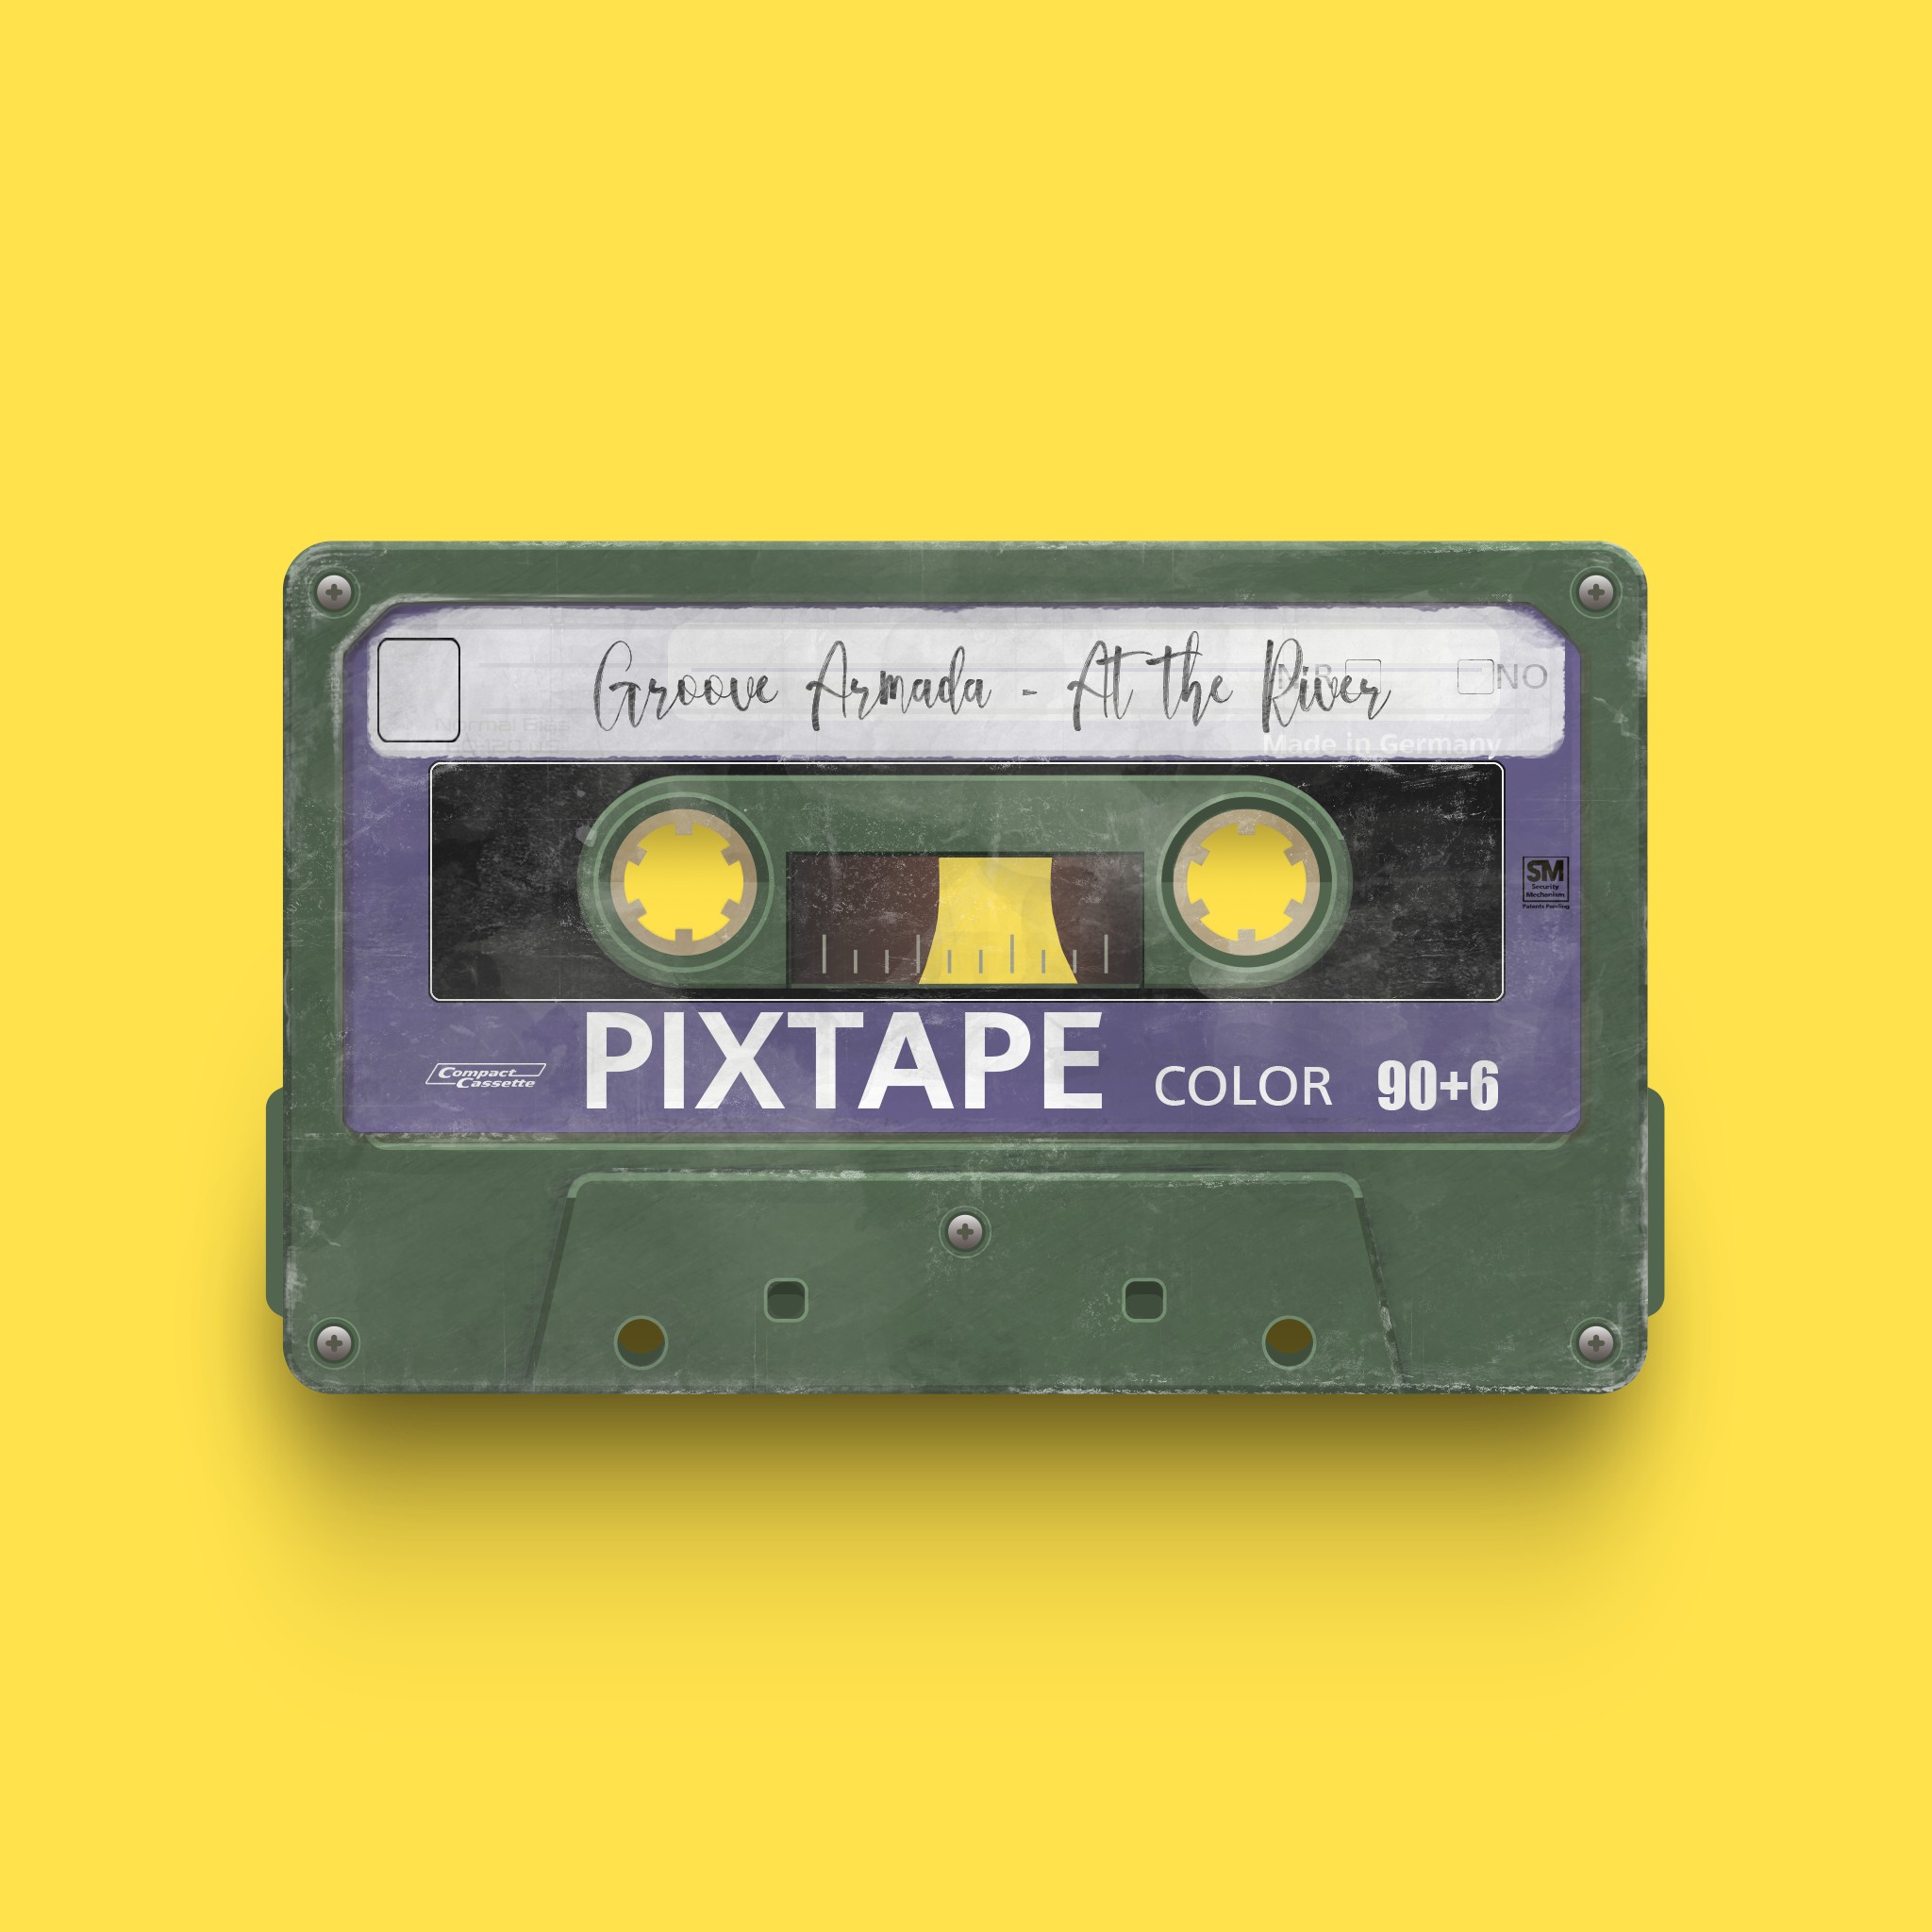 PixTape #23 | Groove Armada - At the River